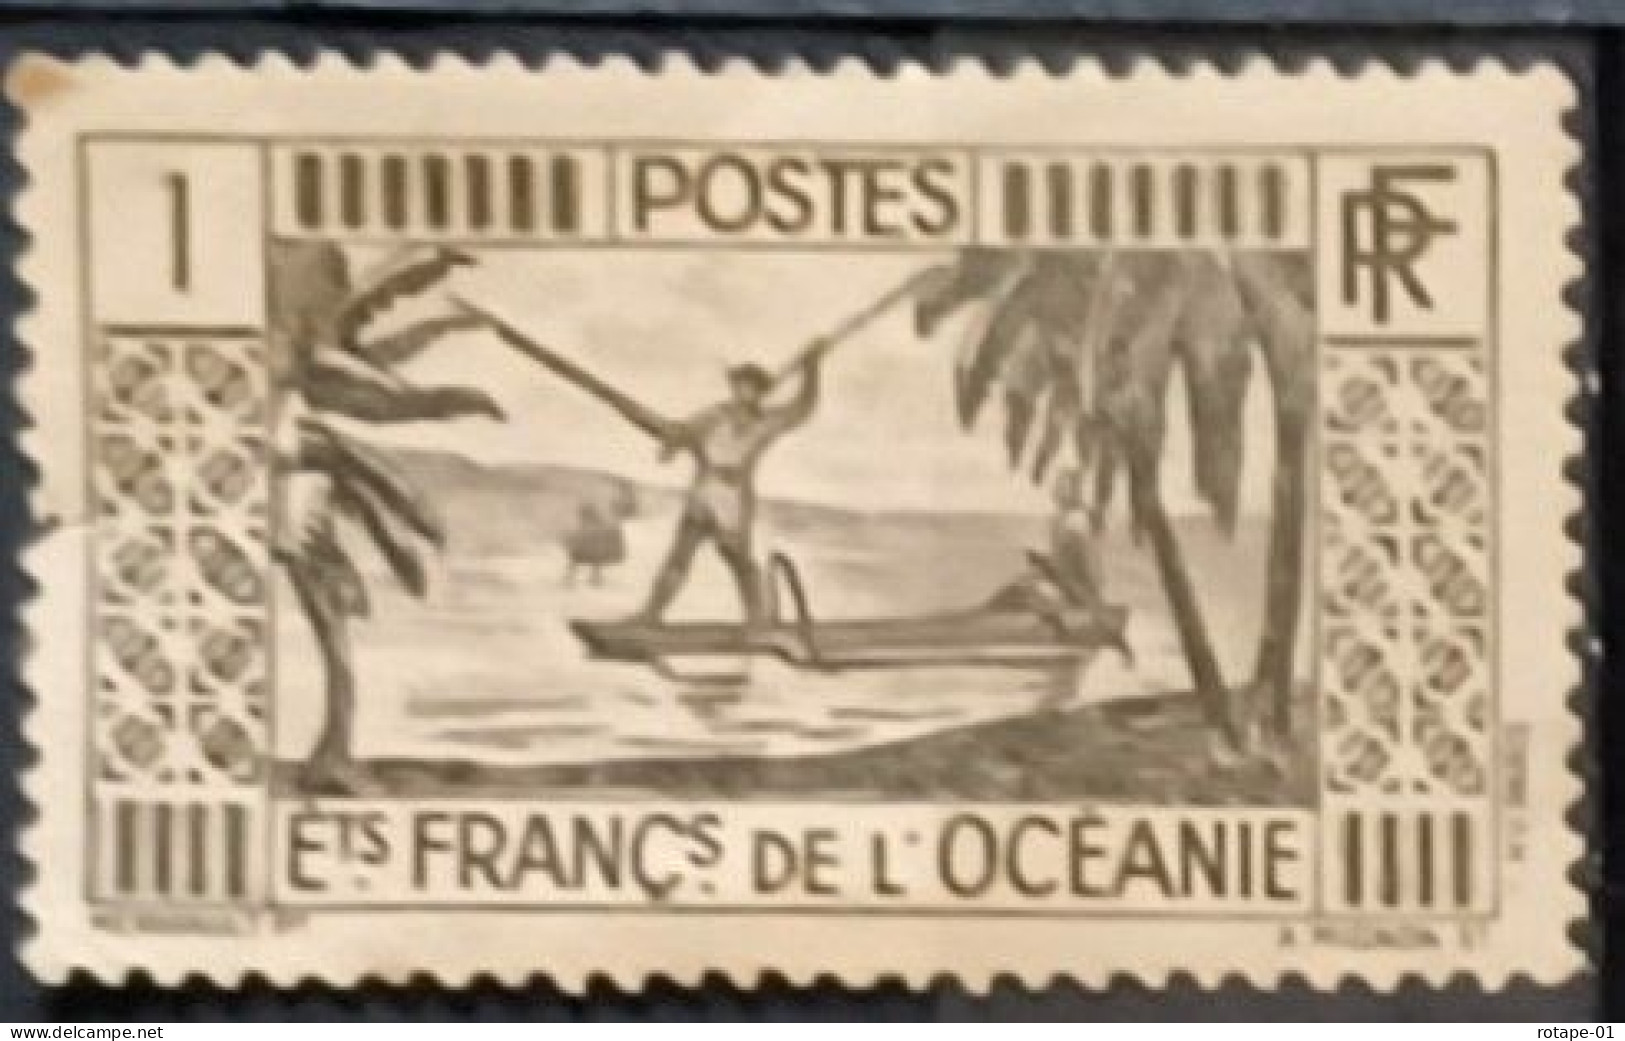 Océanie Française  1939-49,  YT N°84  O,  Cote YT 0,25€ - Neufs